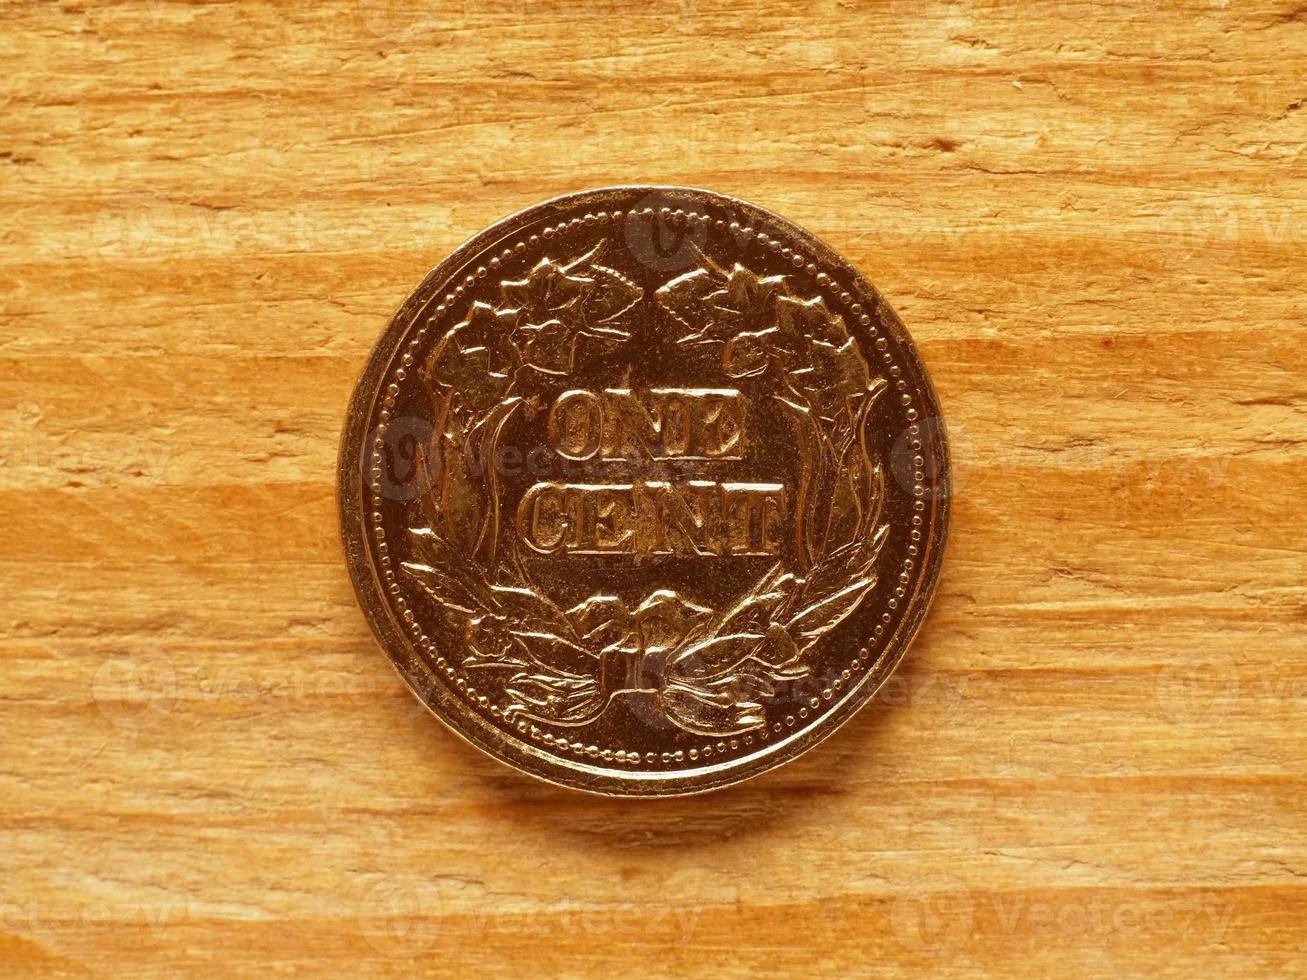 Währung der USA 1-Cent-Münze umgekehrt foto